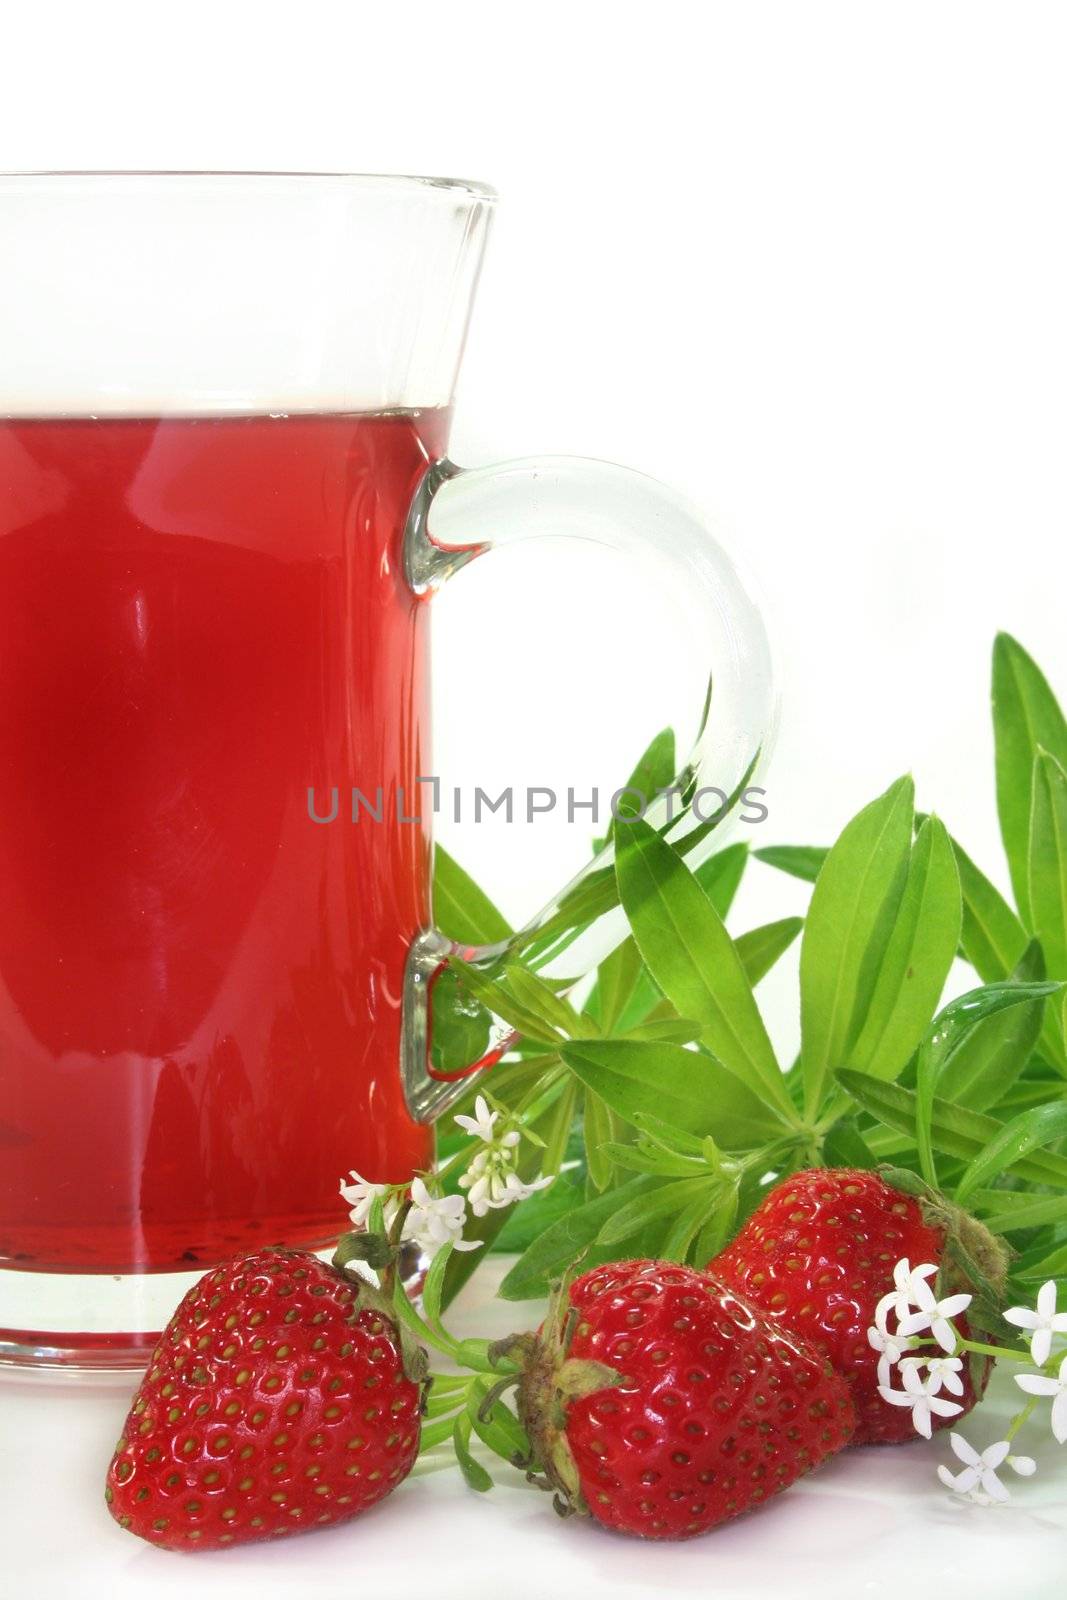 Strawberry Woodruff Tea with fresh strawberries and woodruff